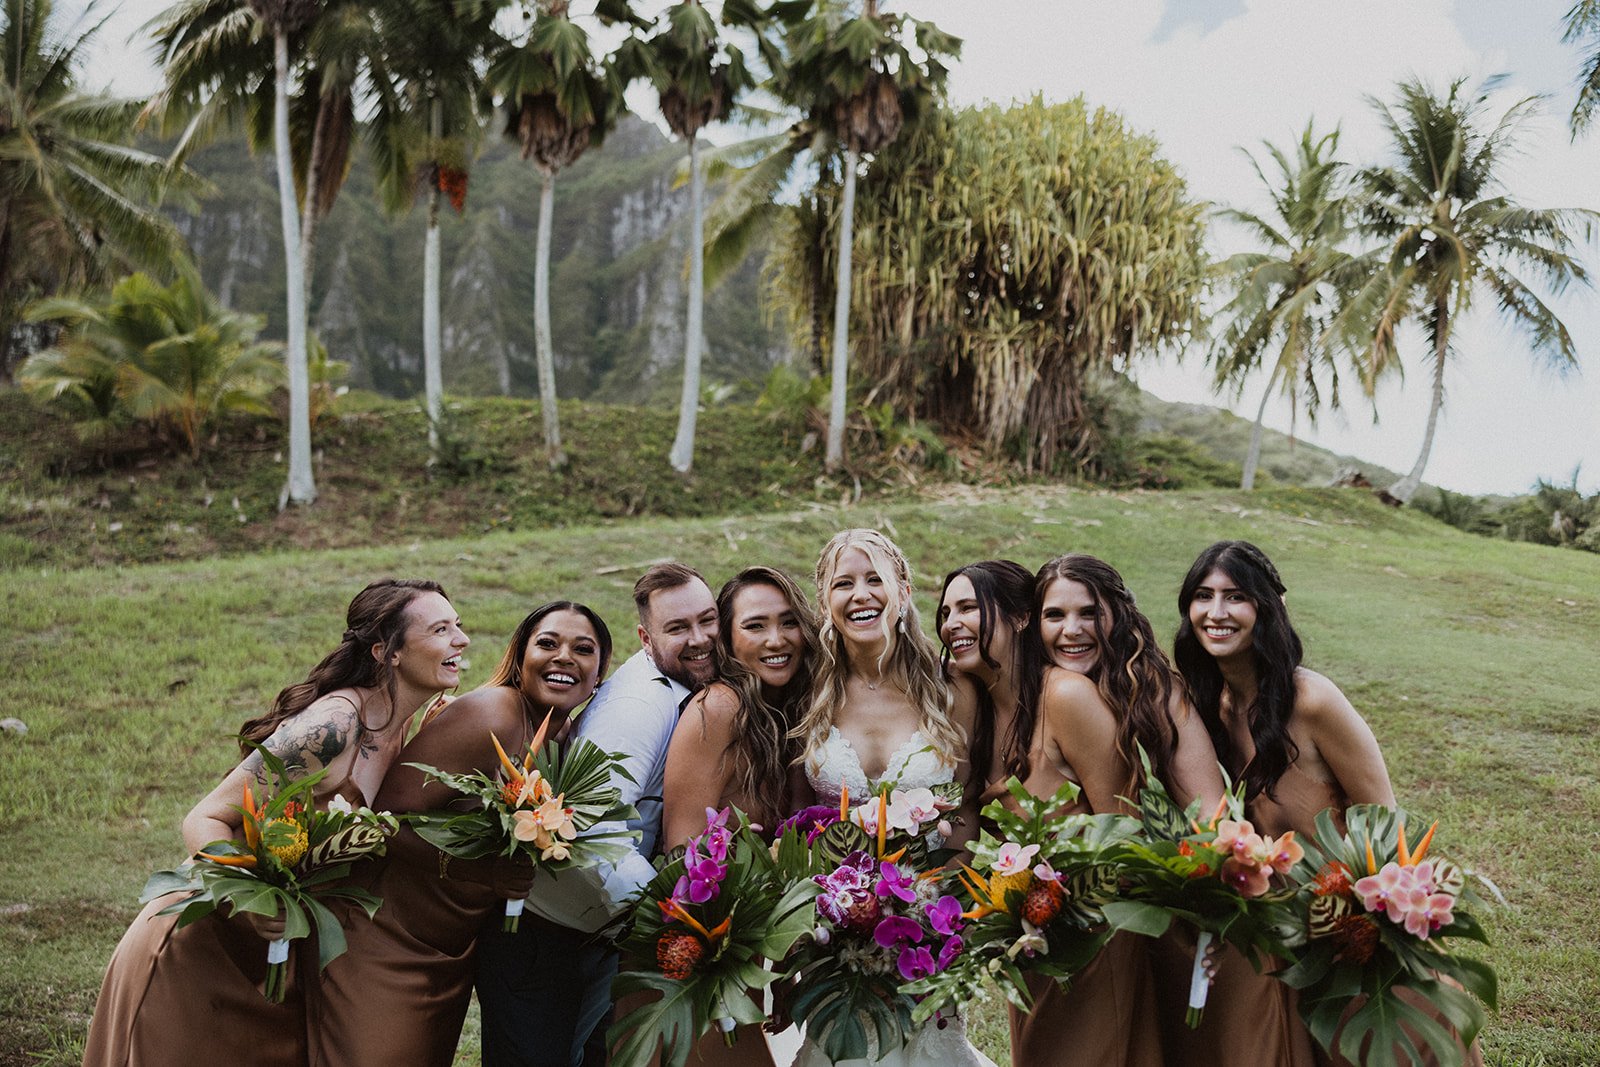 e-s-kualoa-ranch-hawaii-wedding-4617.jpg